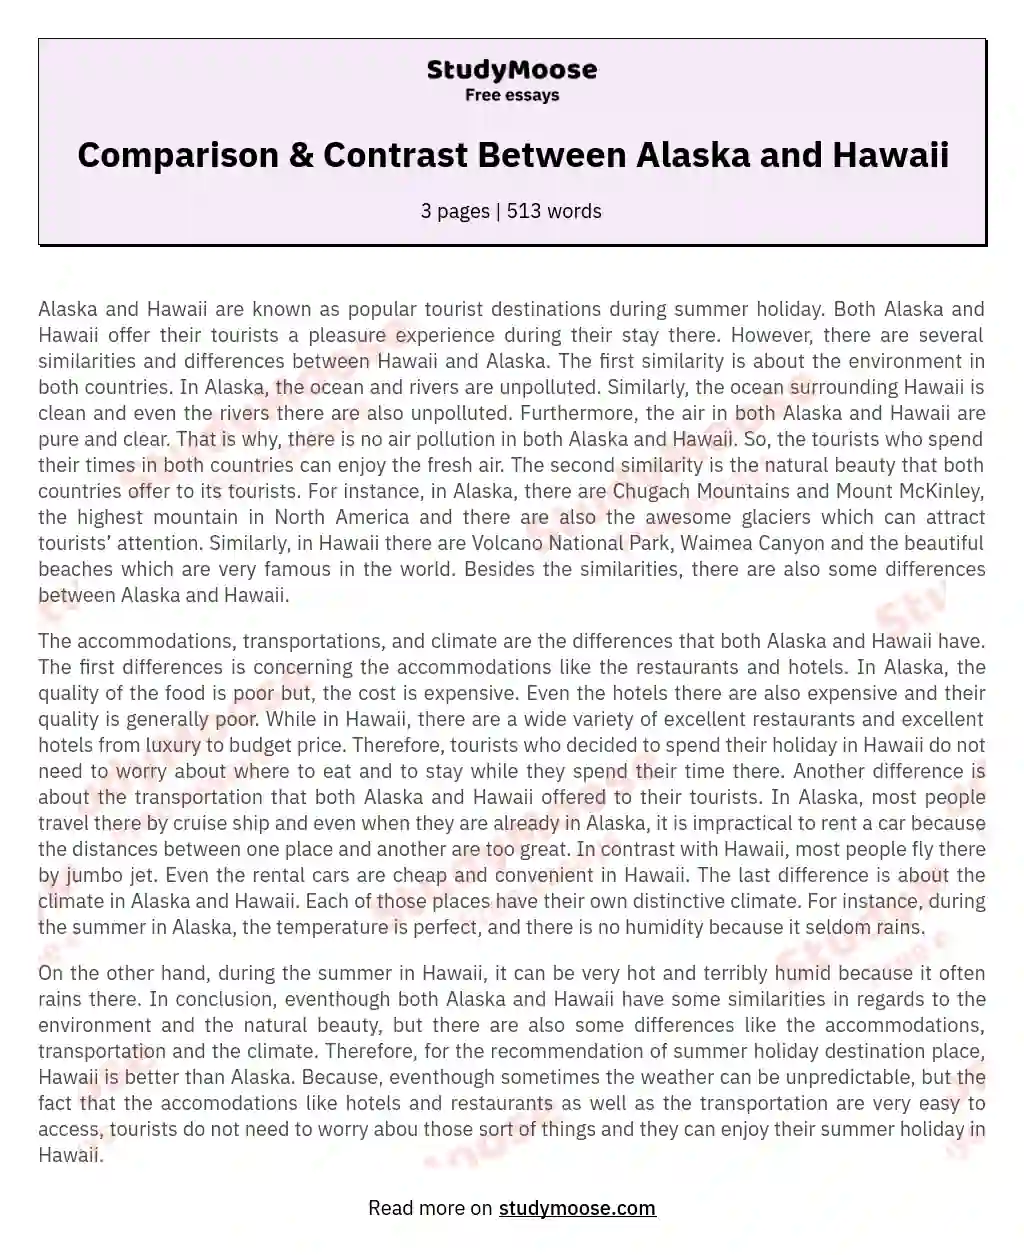 Comparison & Contrast Between Alaska and Hawaii